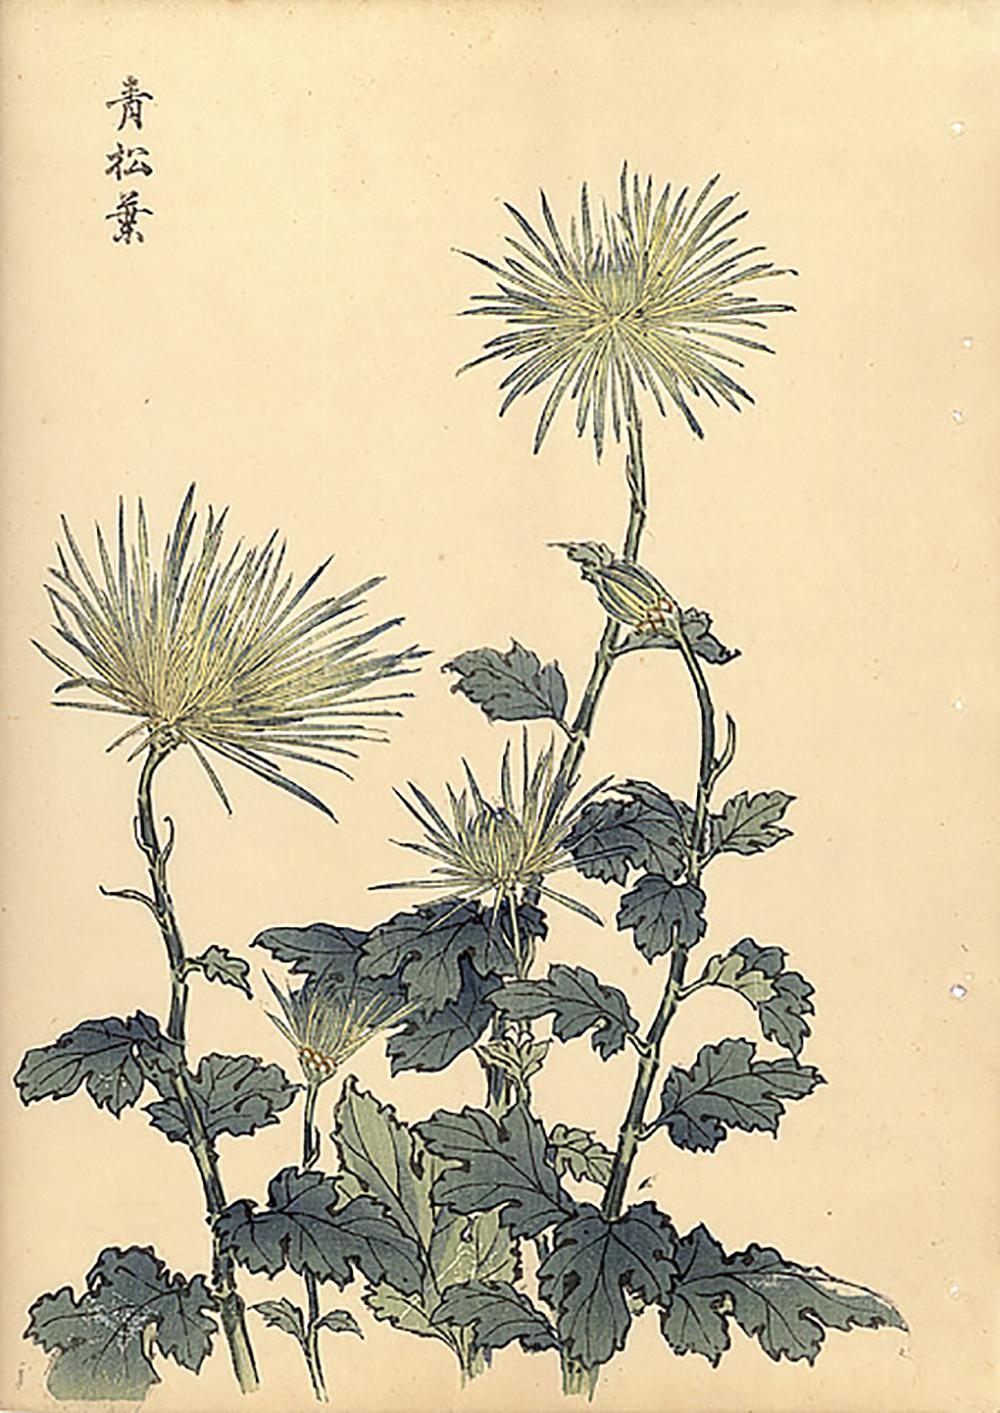 Unknown Landscape Print - Chrysanthemum Woodblock Print - 20